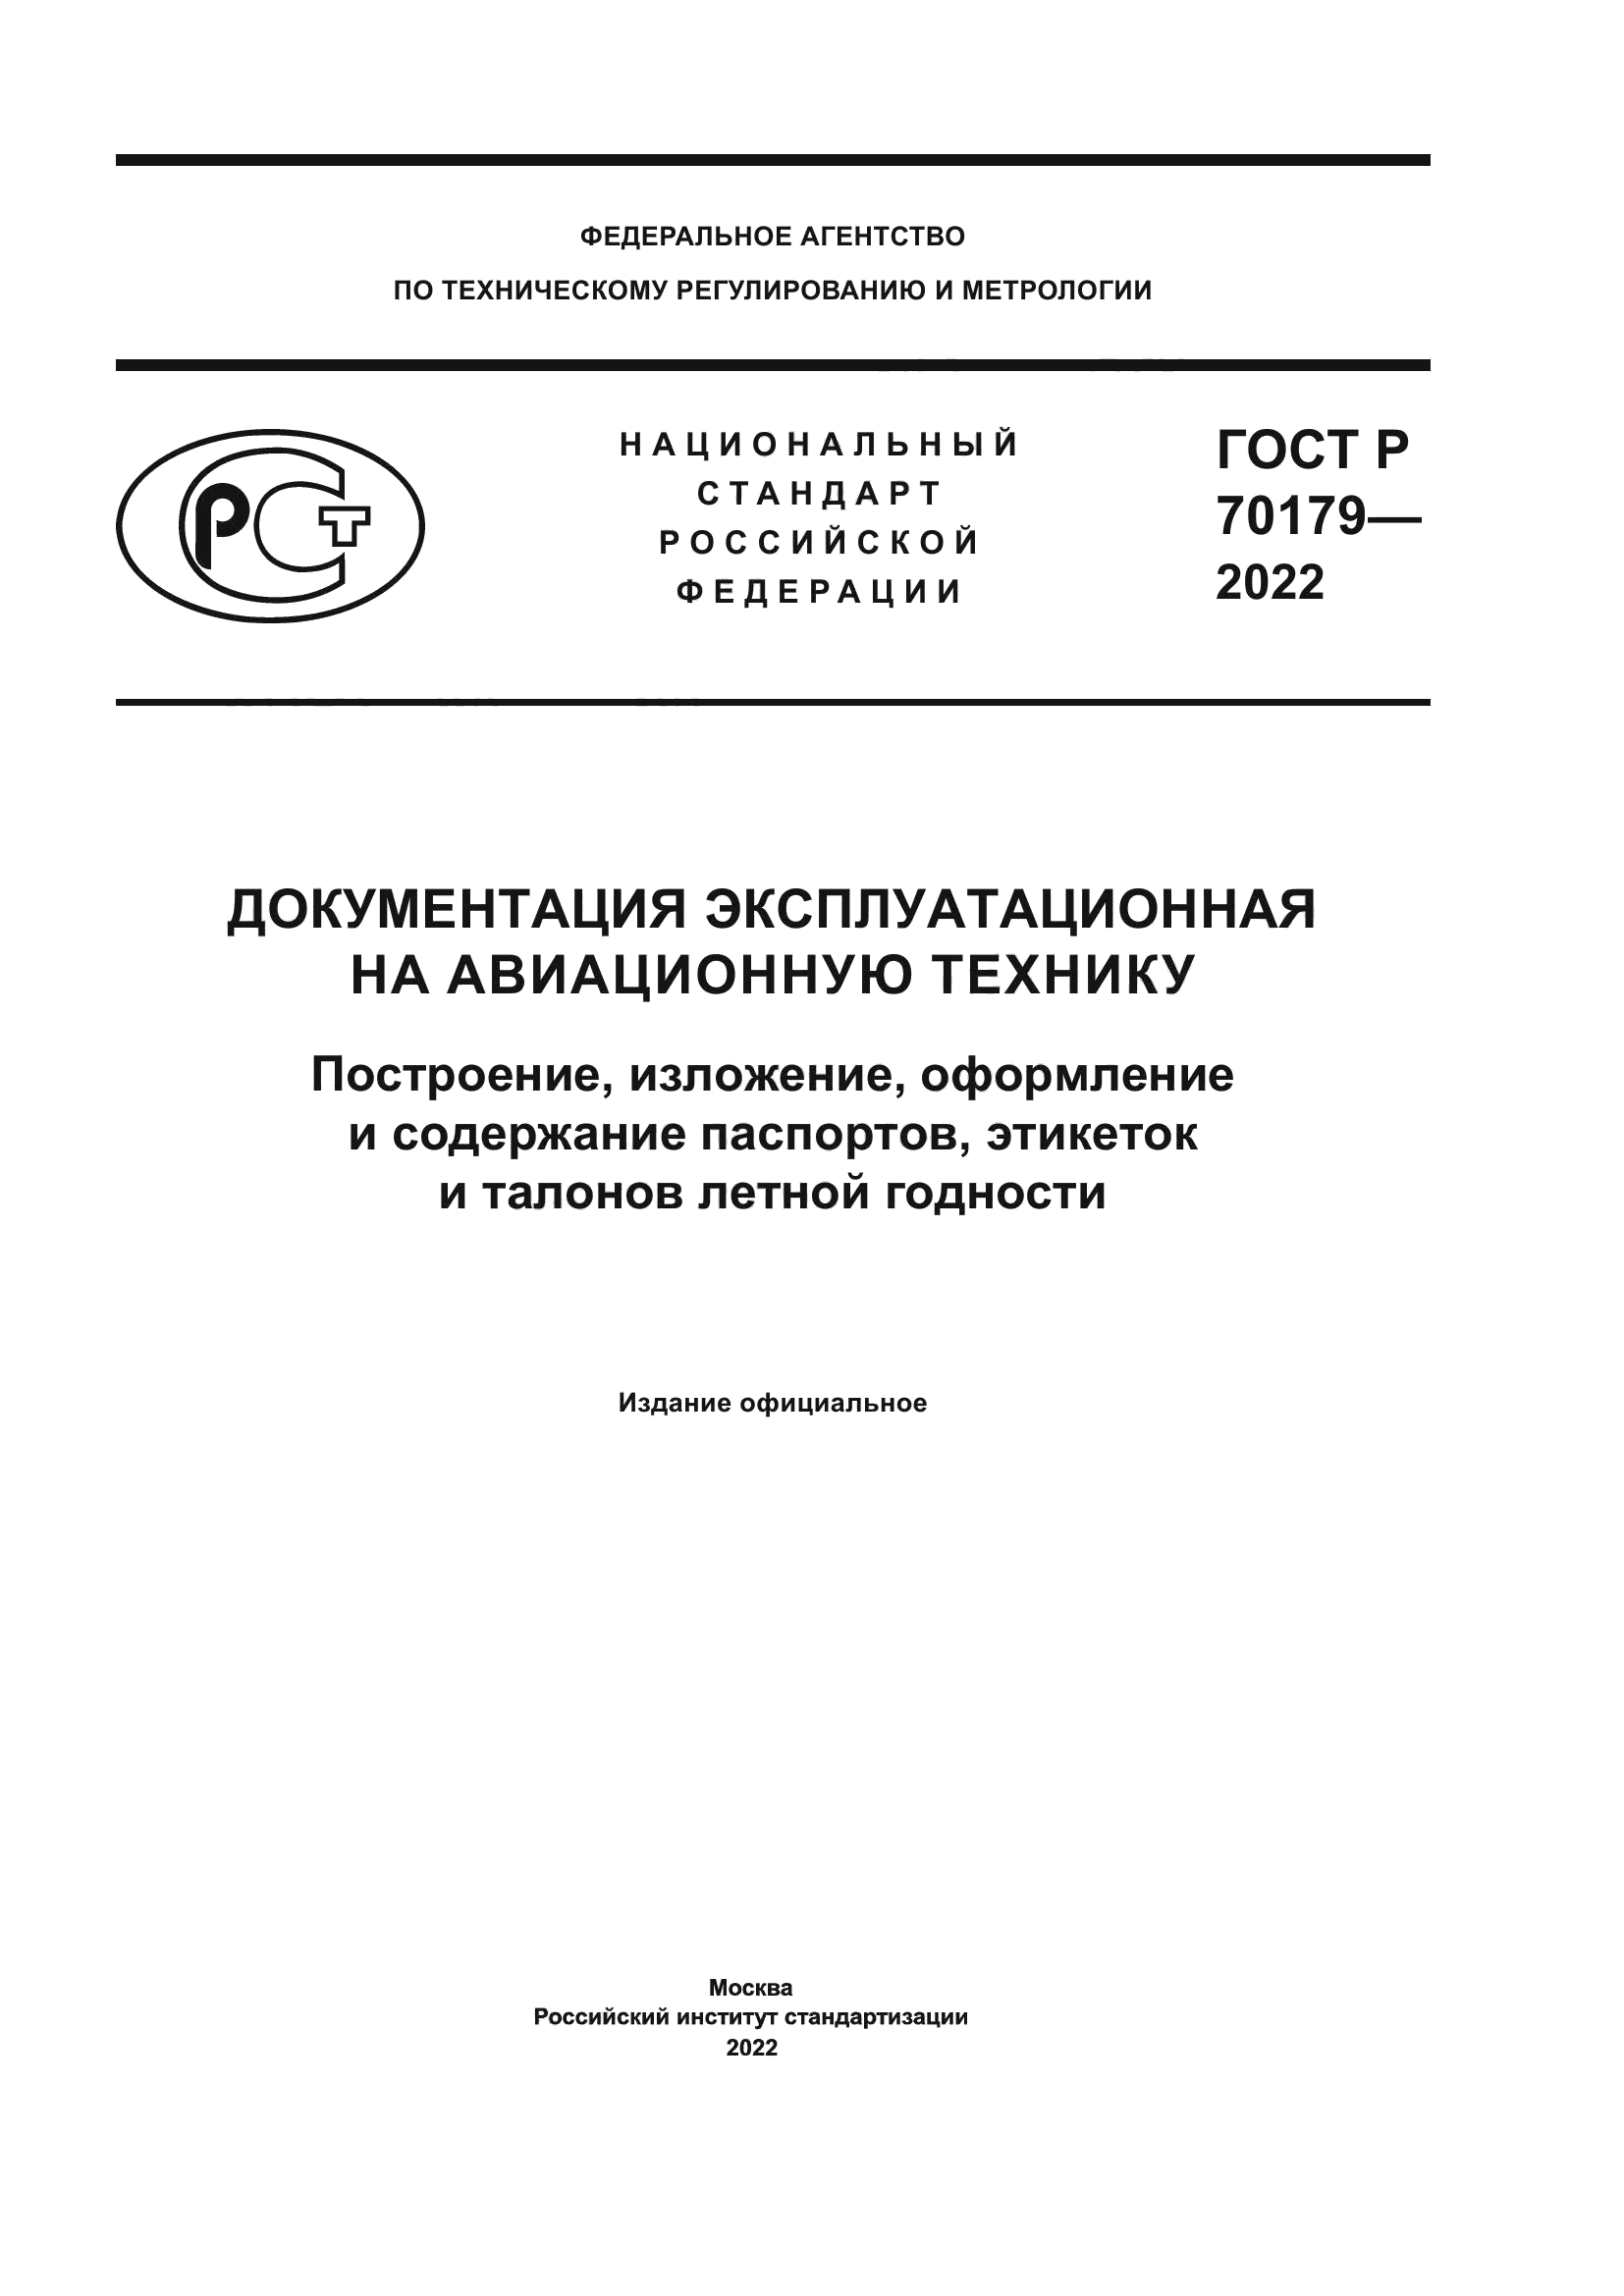 ГОСТ Р 70179-2022